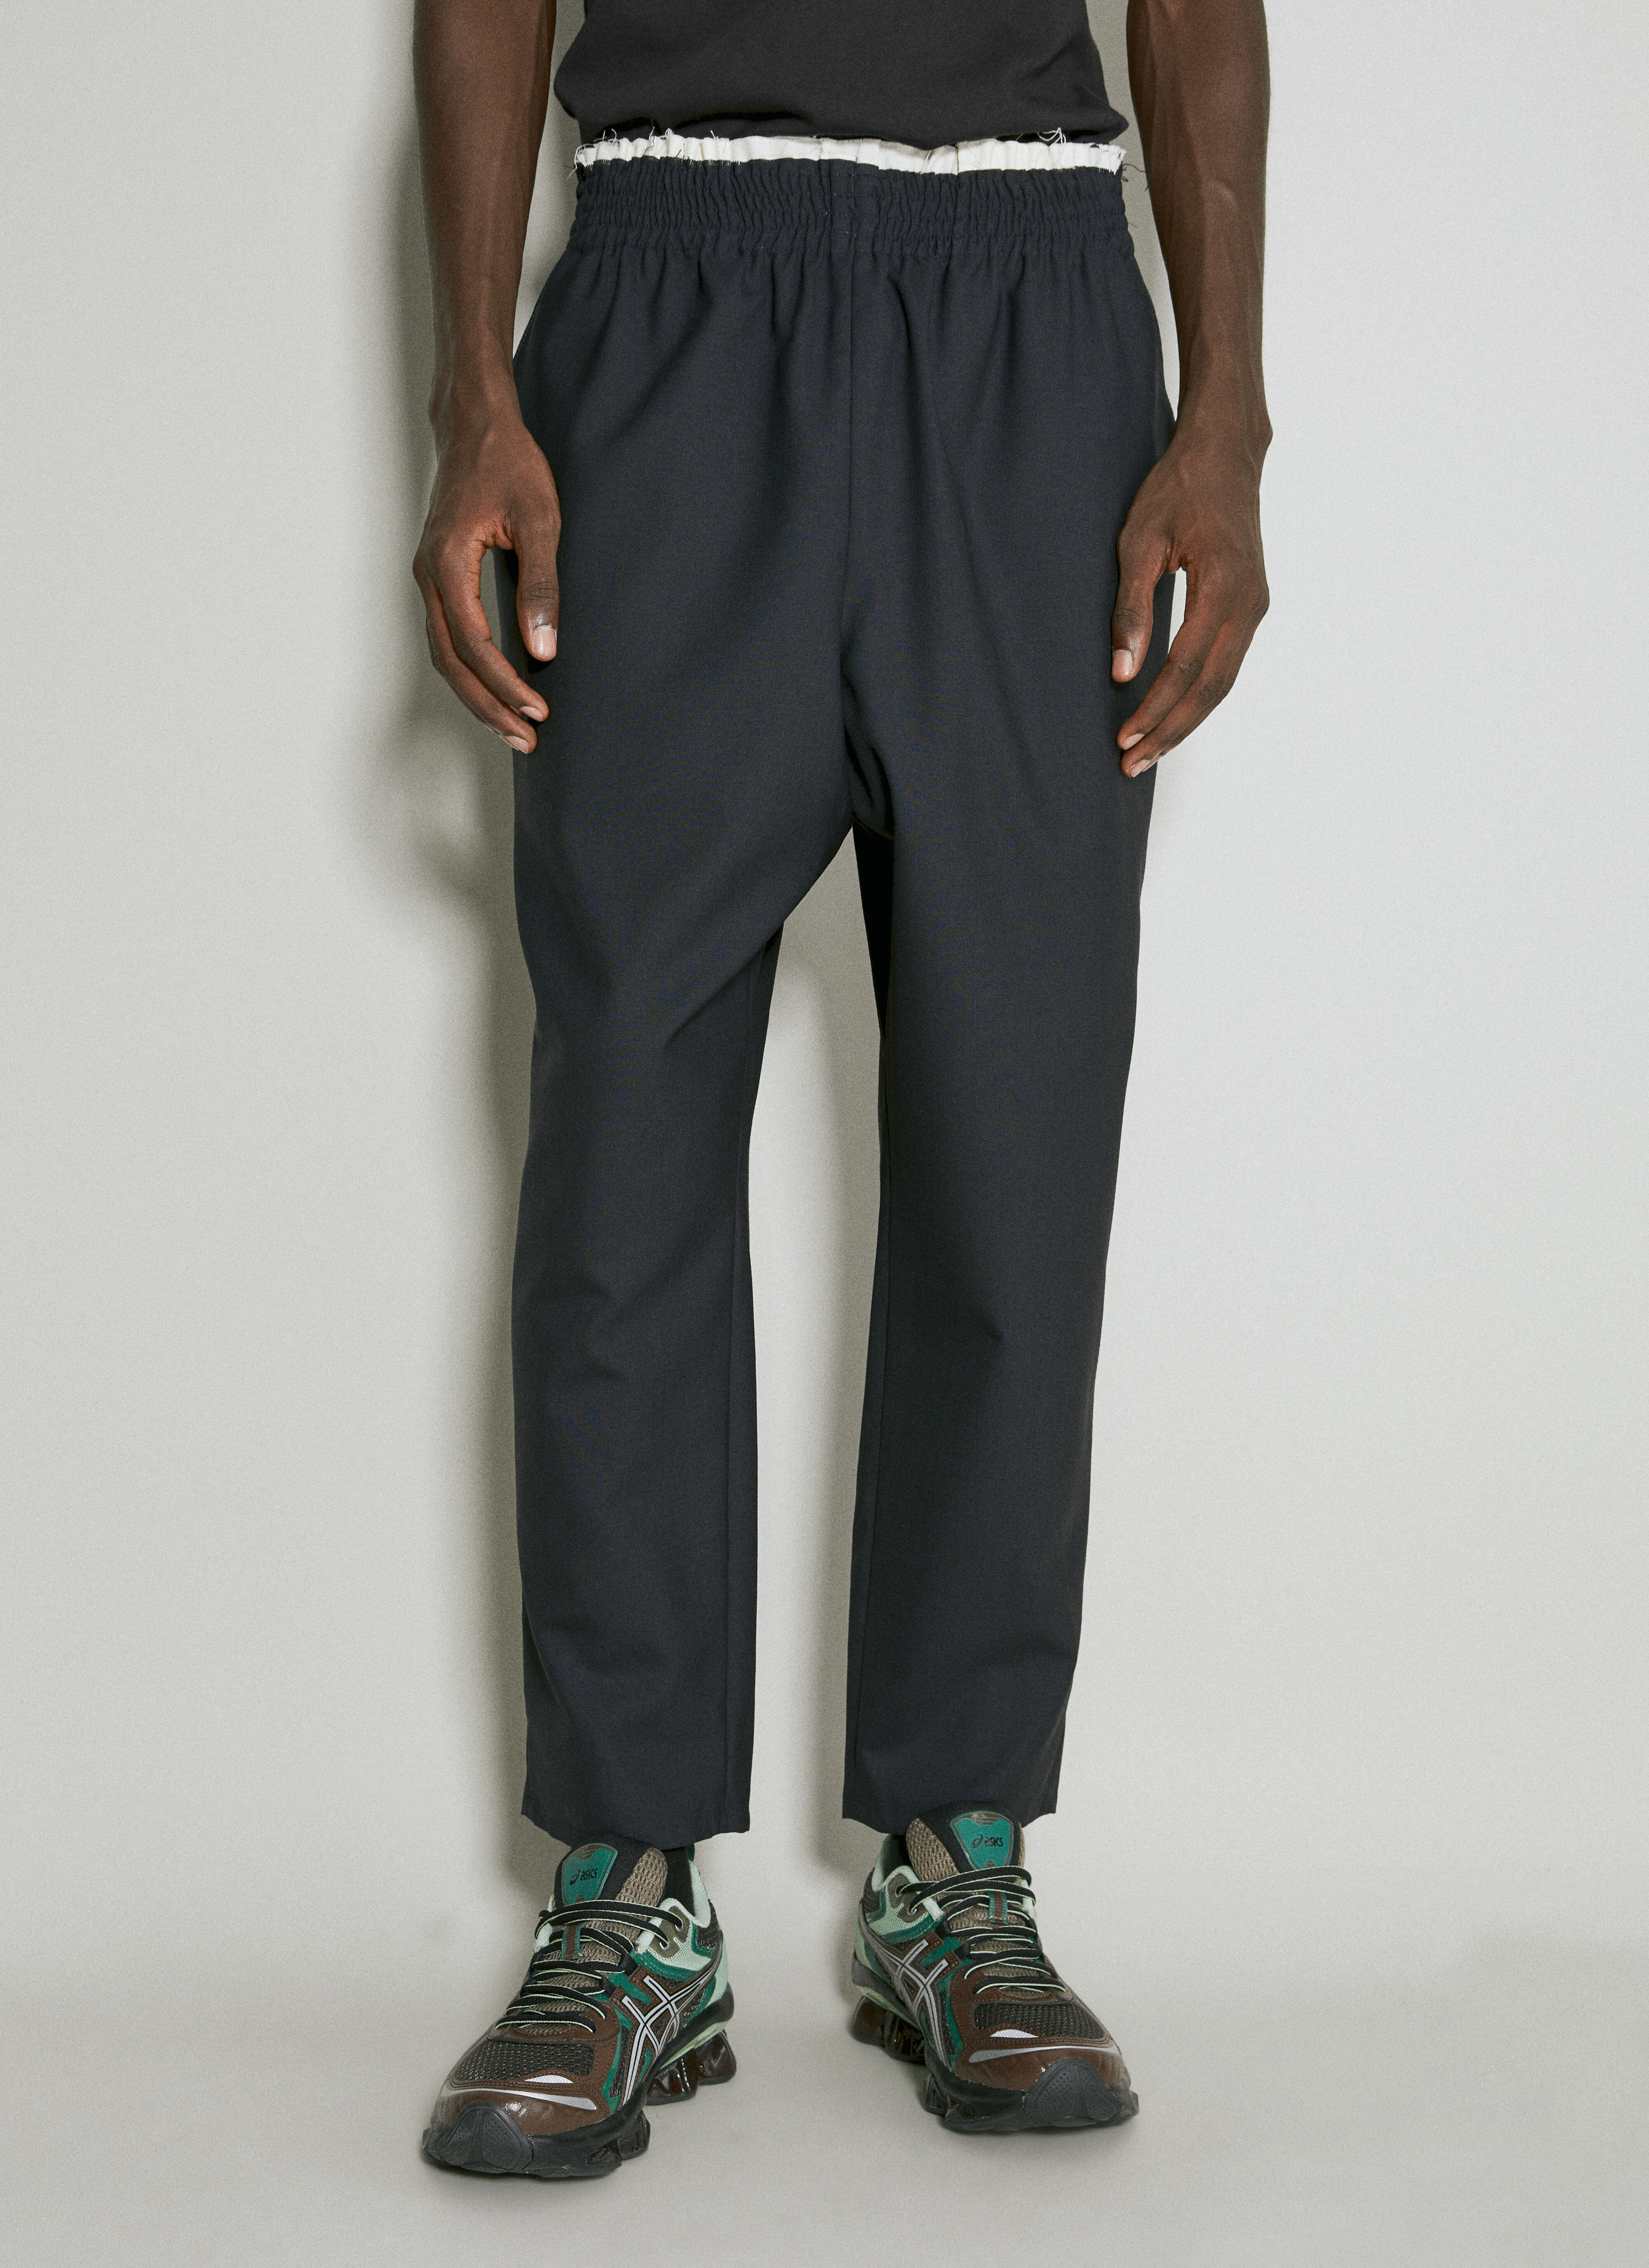 Camiel Fortgens Clothing for Men: Jackets & Pants | LN-CC®